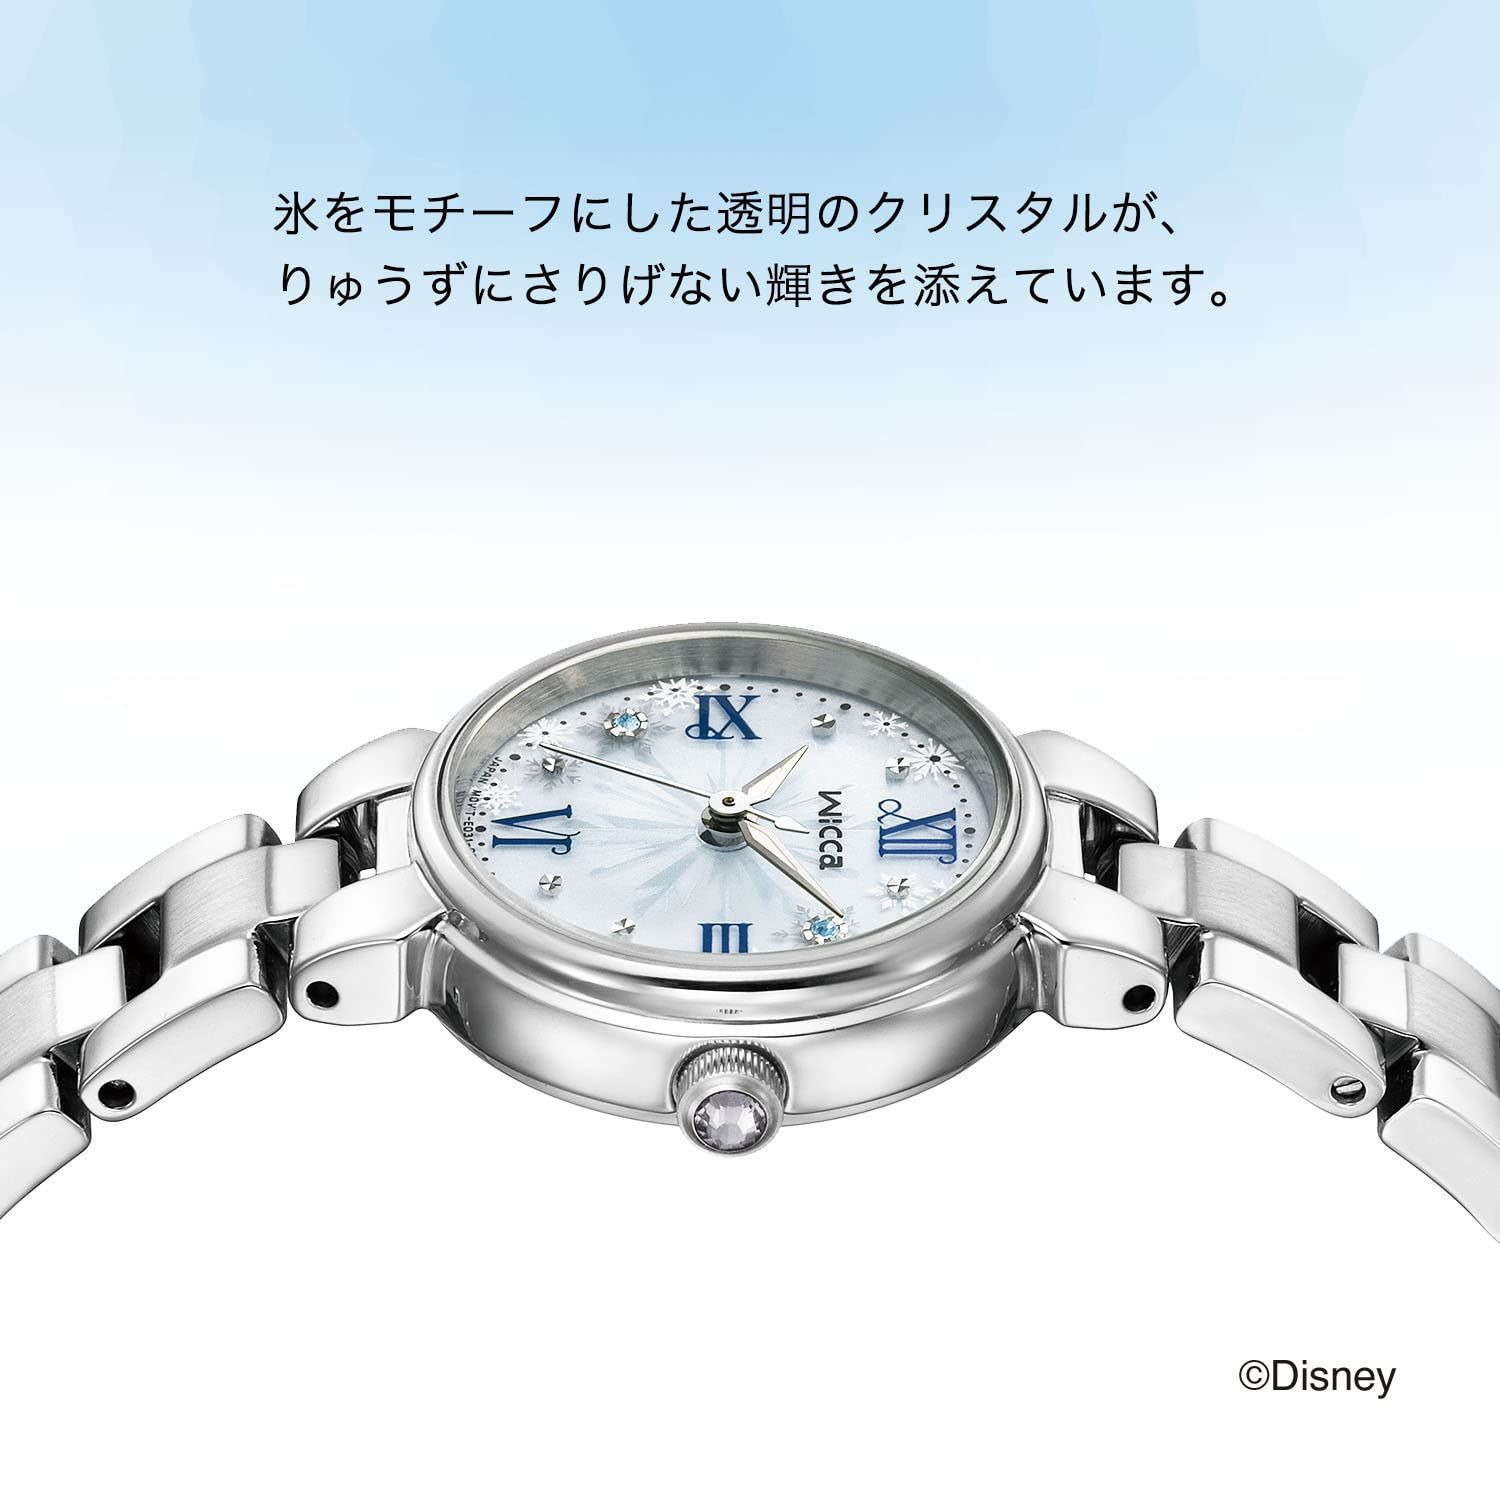 [Citizen] 腕時計 ウィッカ 『アナと雪の女王』 限定モデル ソーラーテ